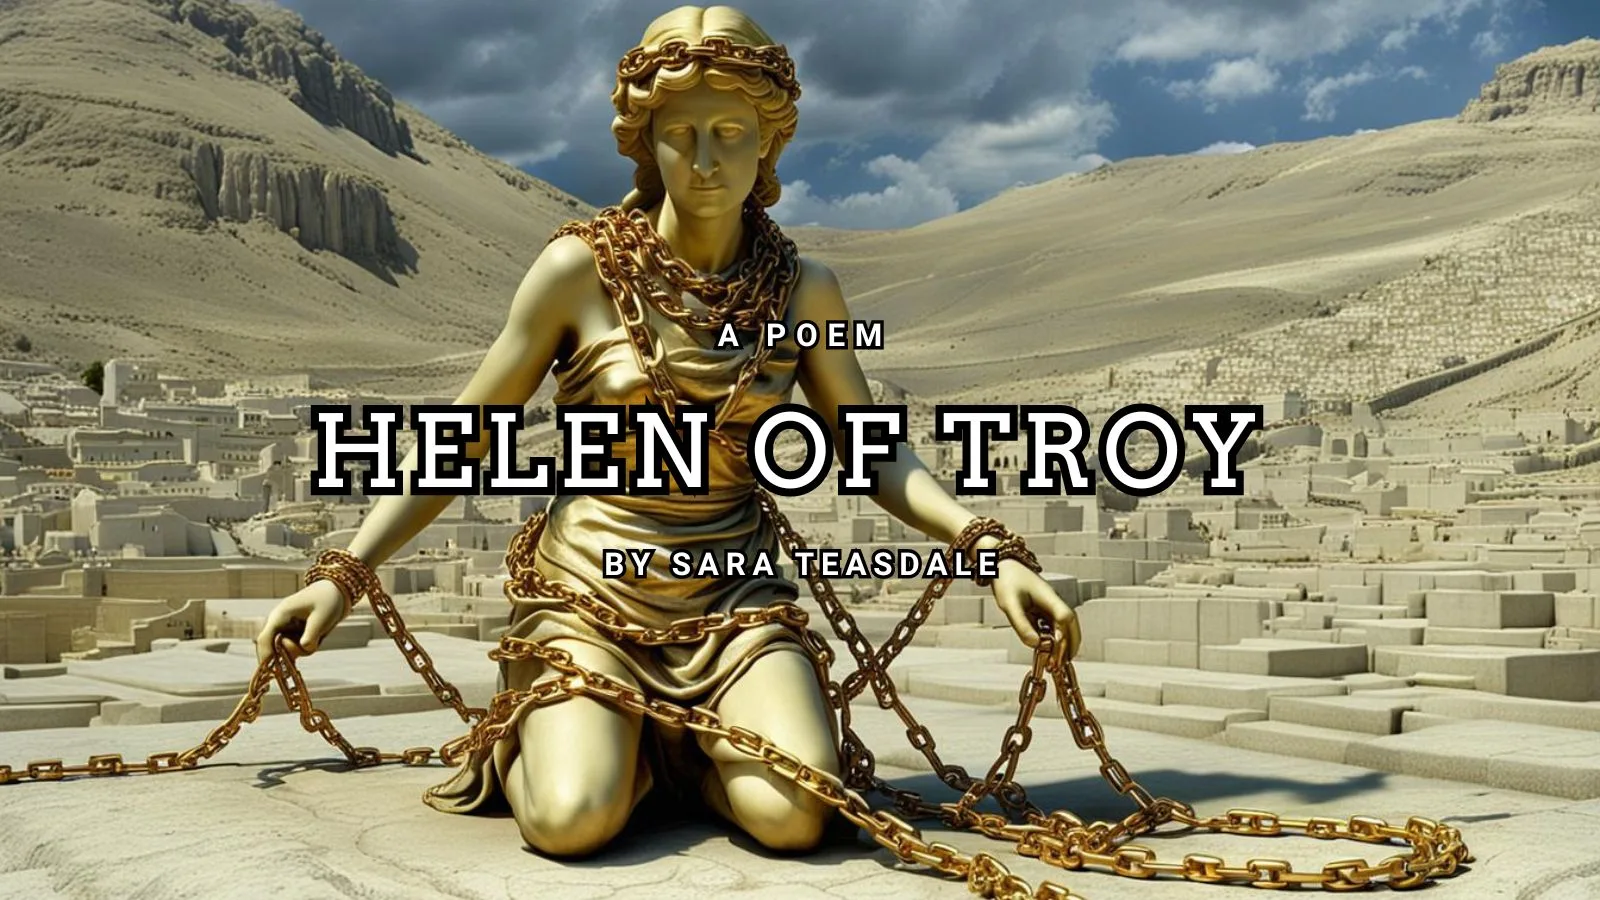 Helen of Troy by Sara Teasdale